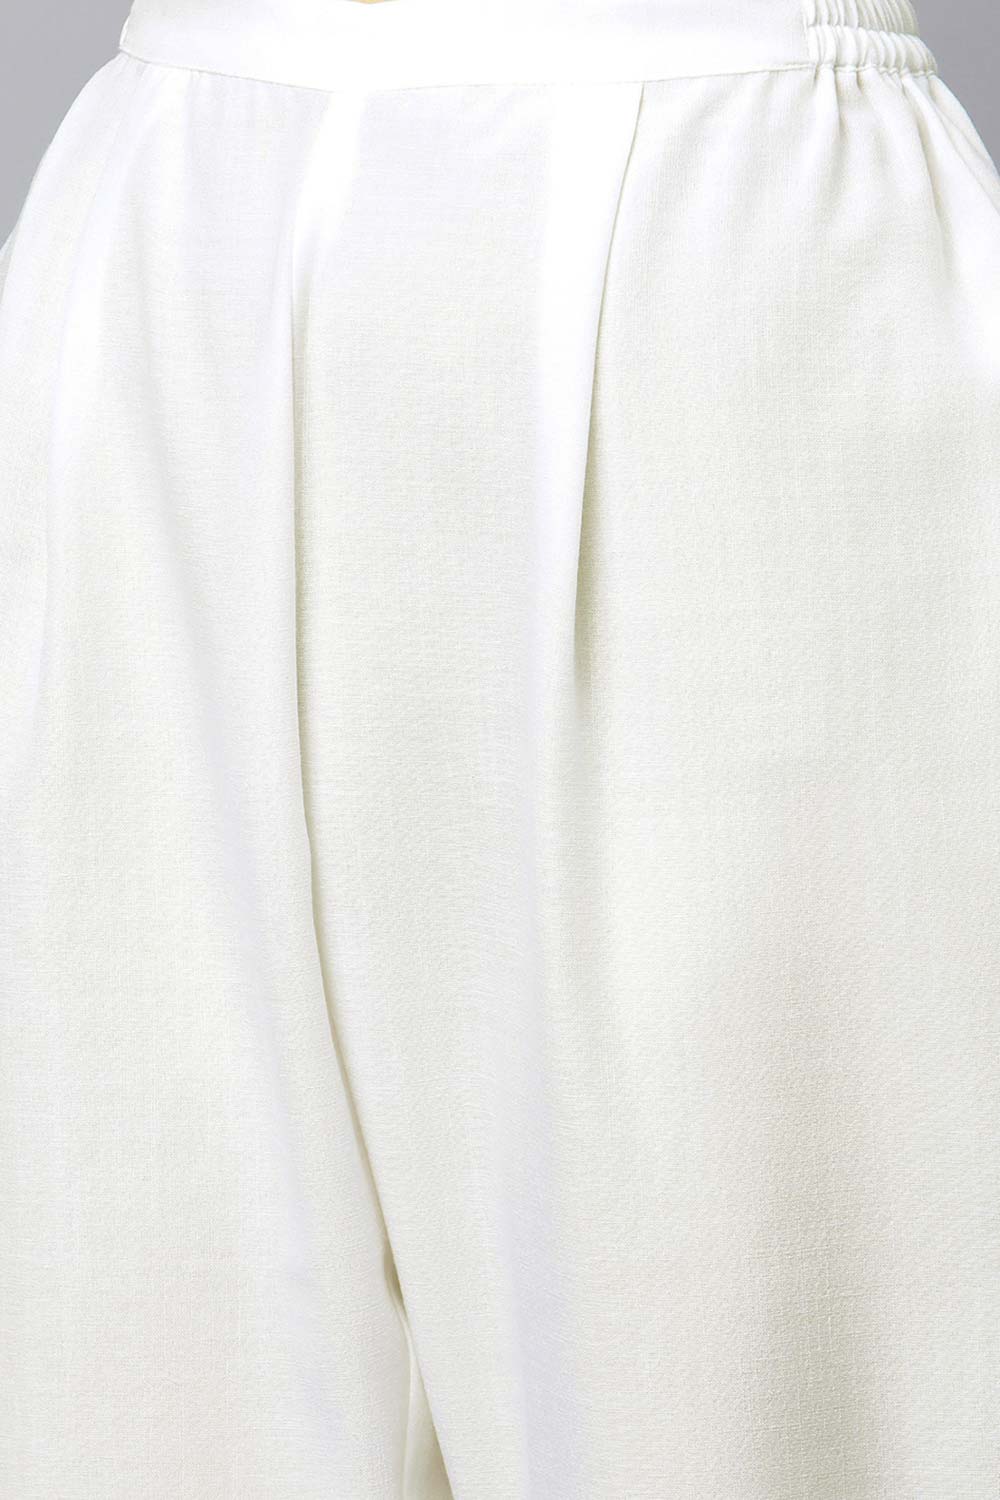 Off White Pure Cotton Printed Asymmetric Kurta Palazzo Set